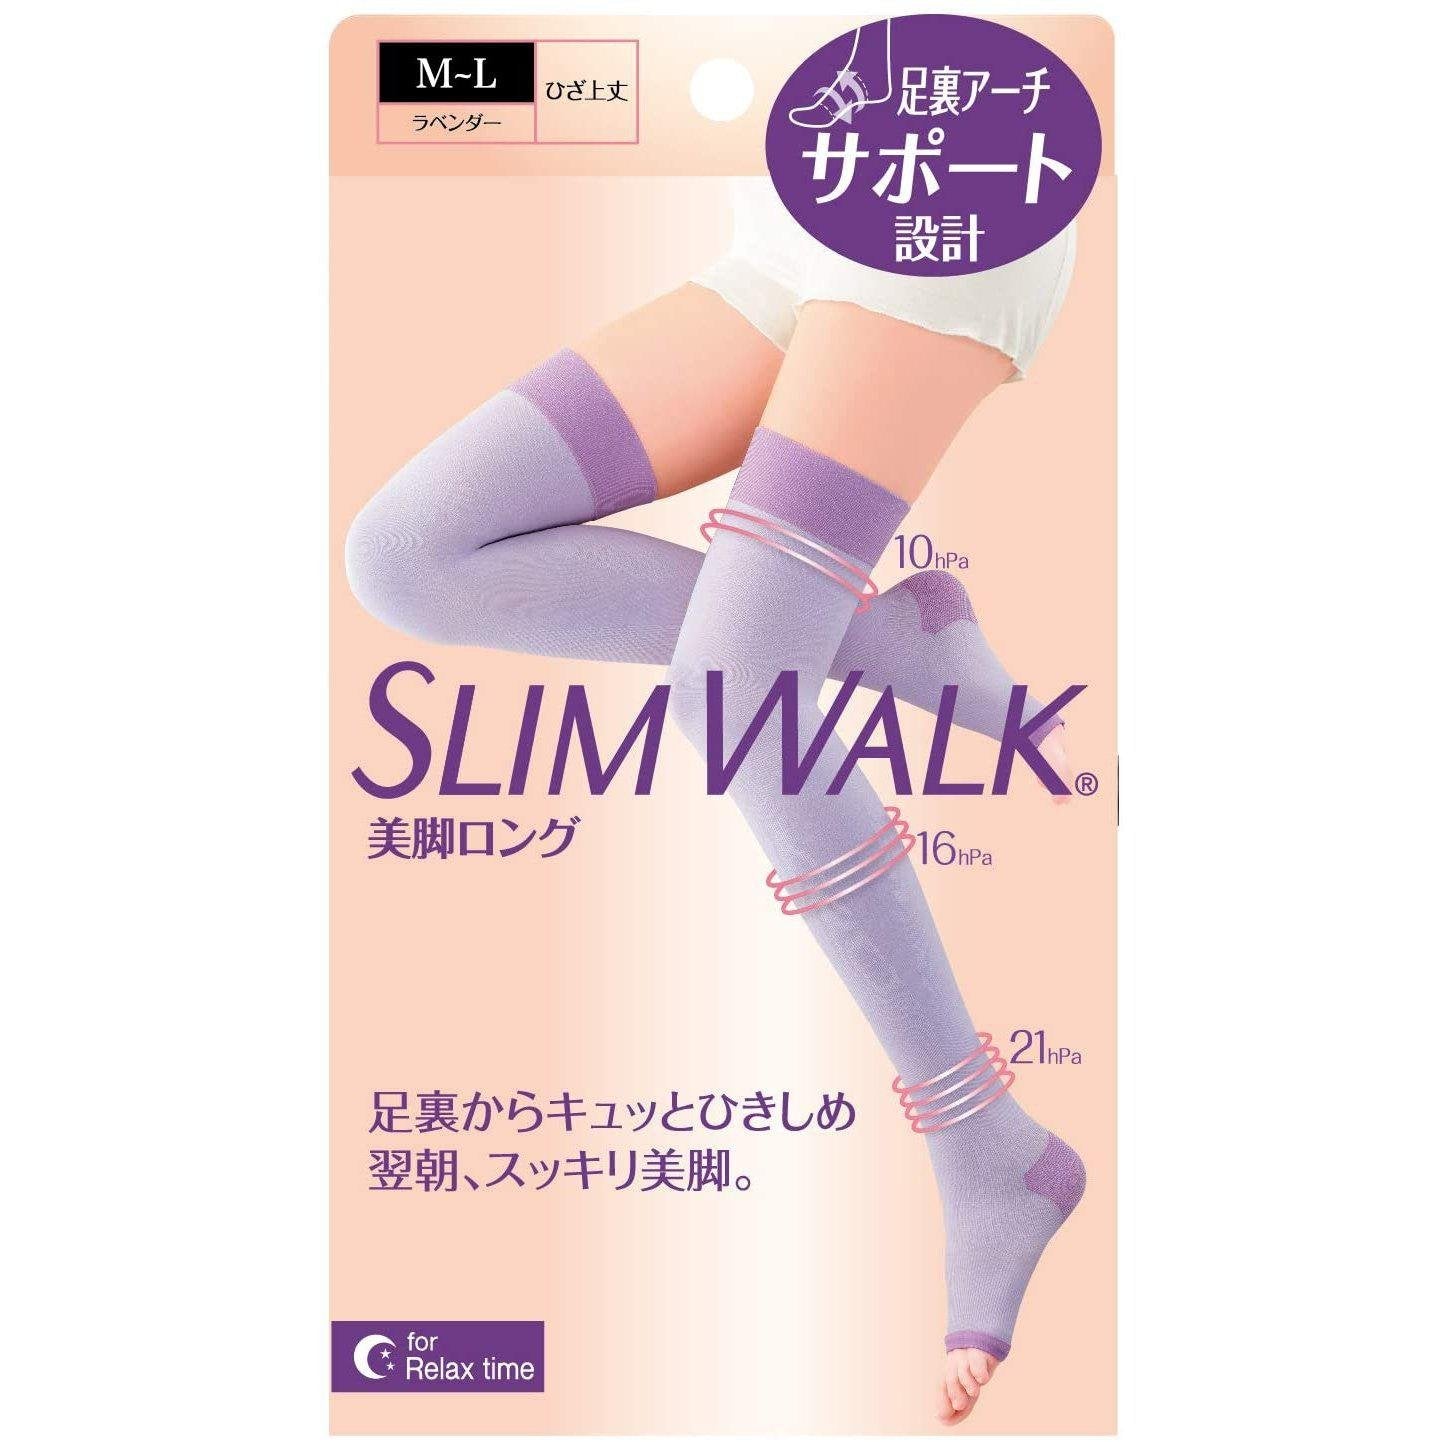 P-1-SLW-SLS-ML-1-Slim Walk Slimming Compression Long Socks Lavender Size M-L.jpg